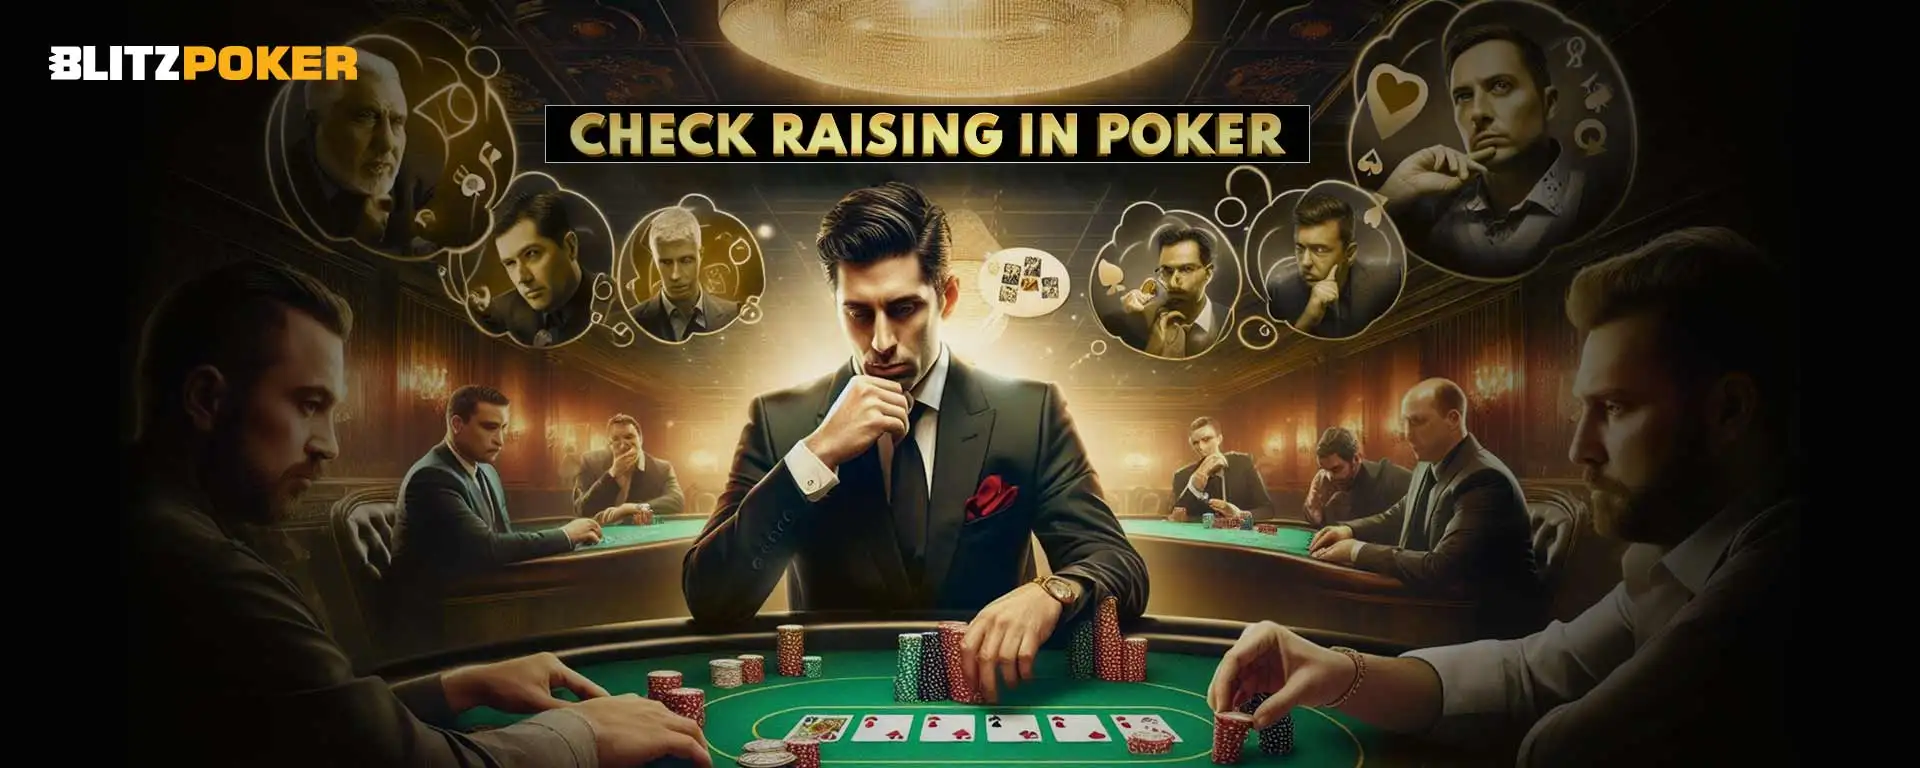 Check-Raising-in-Poker